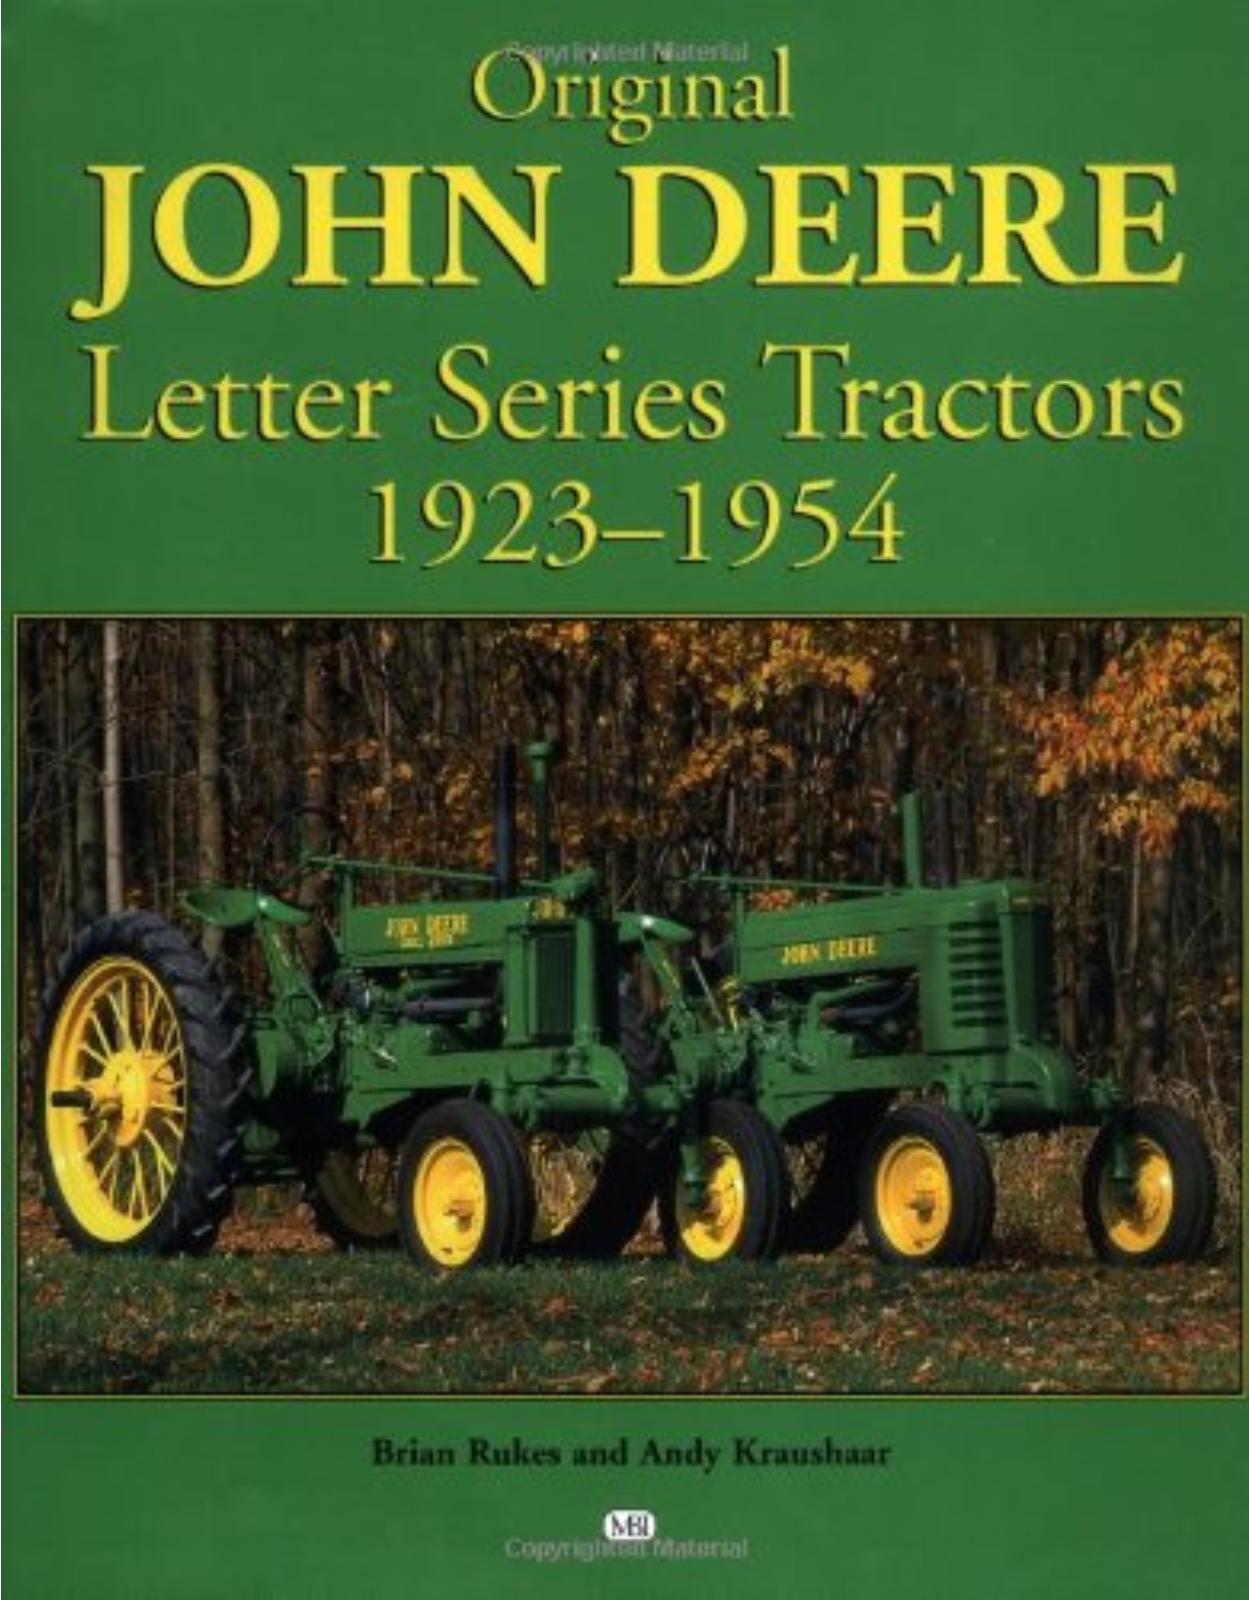 Original John Deere Letter Series Tractors, 1923-1954